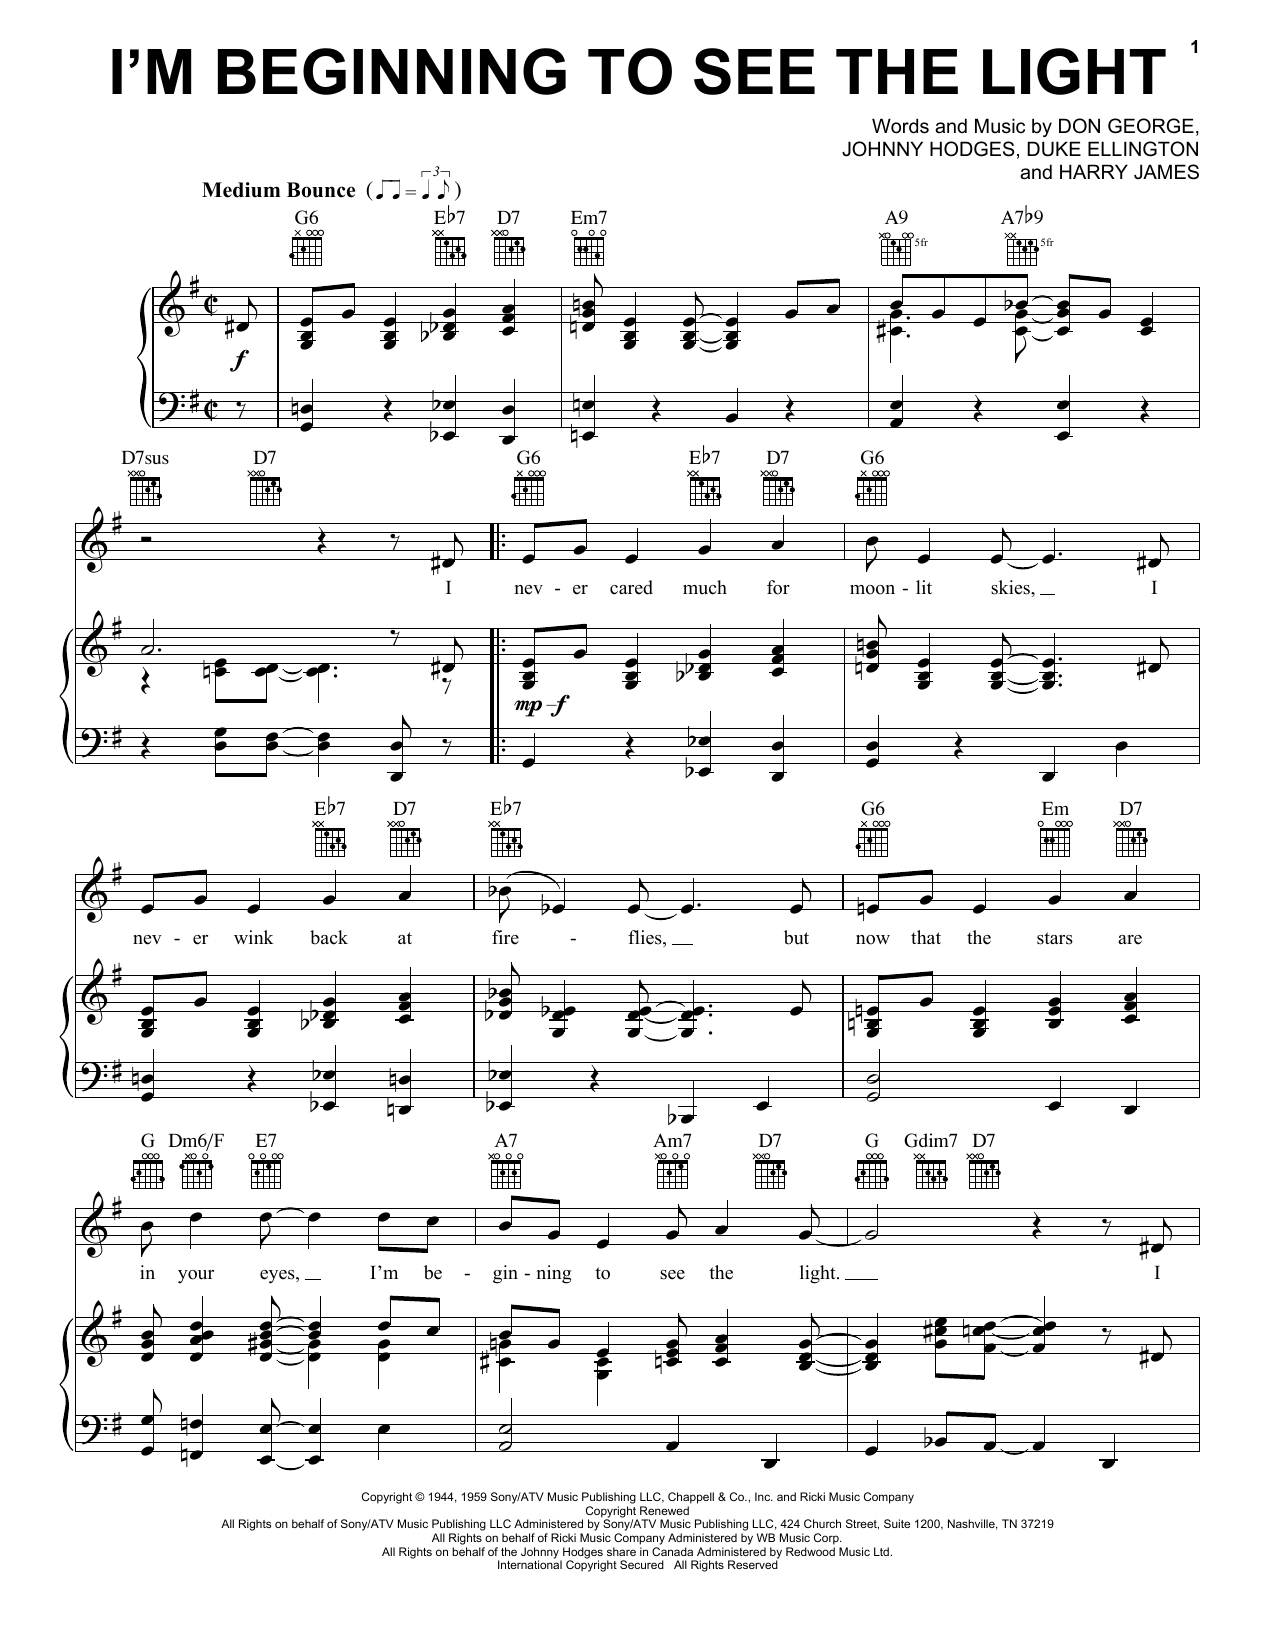 Duke Ellington I'm Beginning To See The Light Sheet Music Notes & Chords for Melody Line, Lyrics & Chords - Download or Print PDF